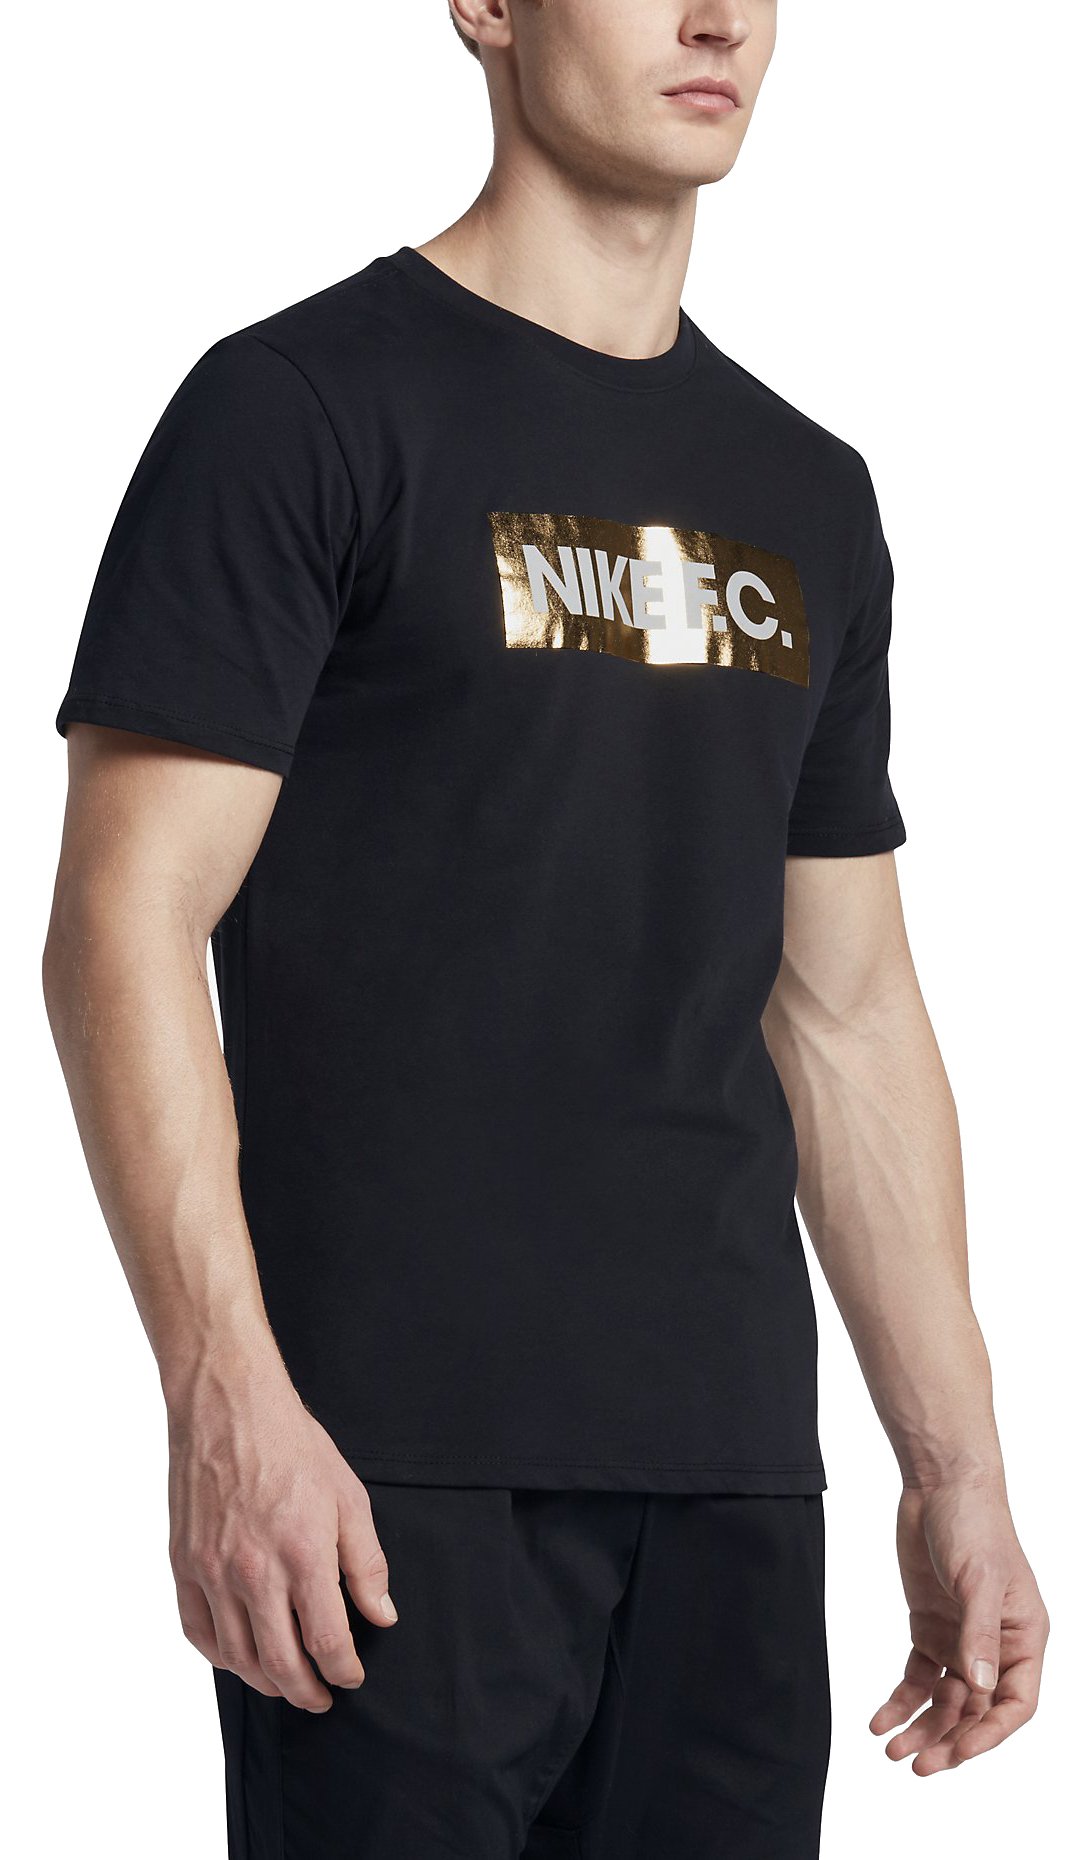 T-shirt Nike FC FOIL TEE